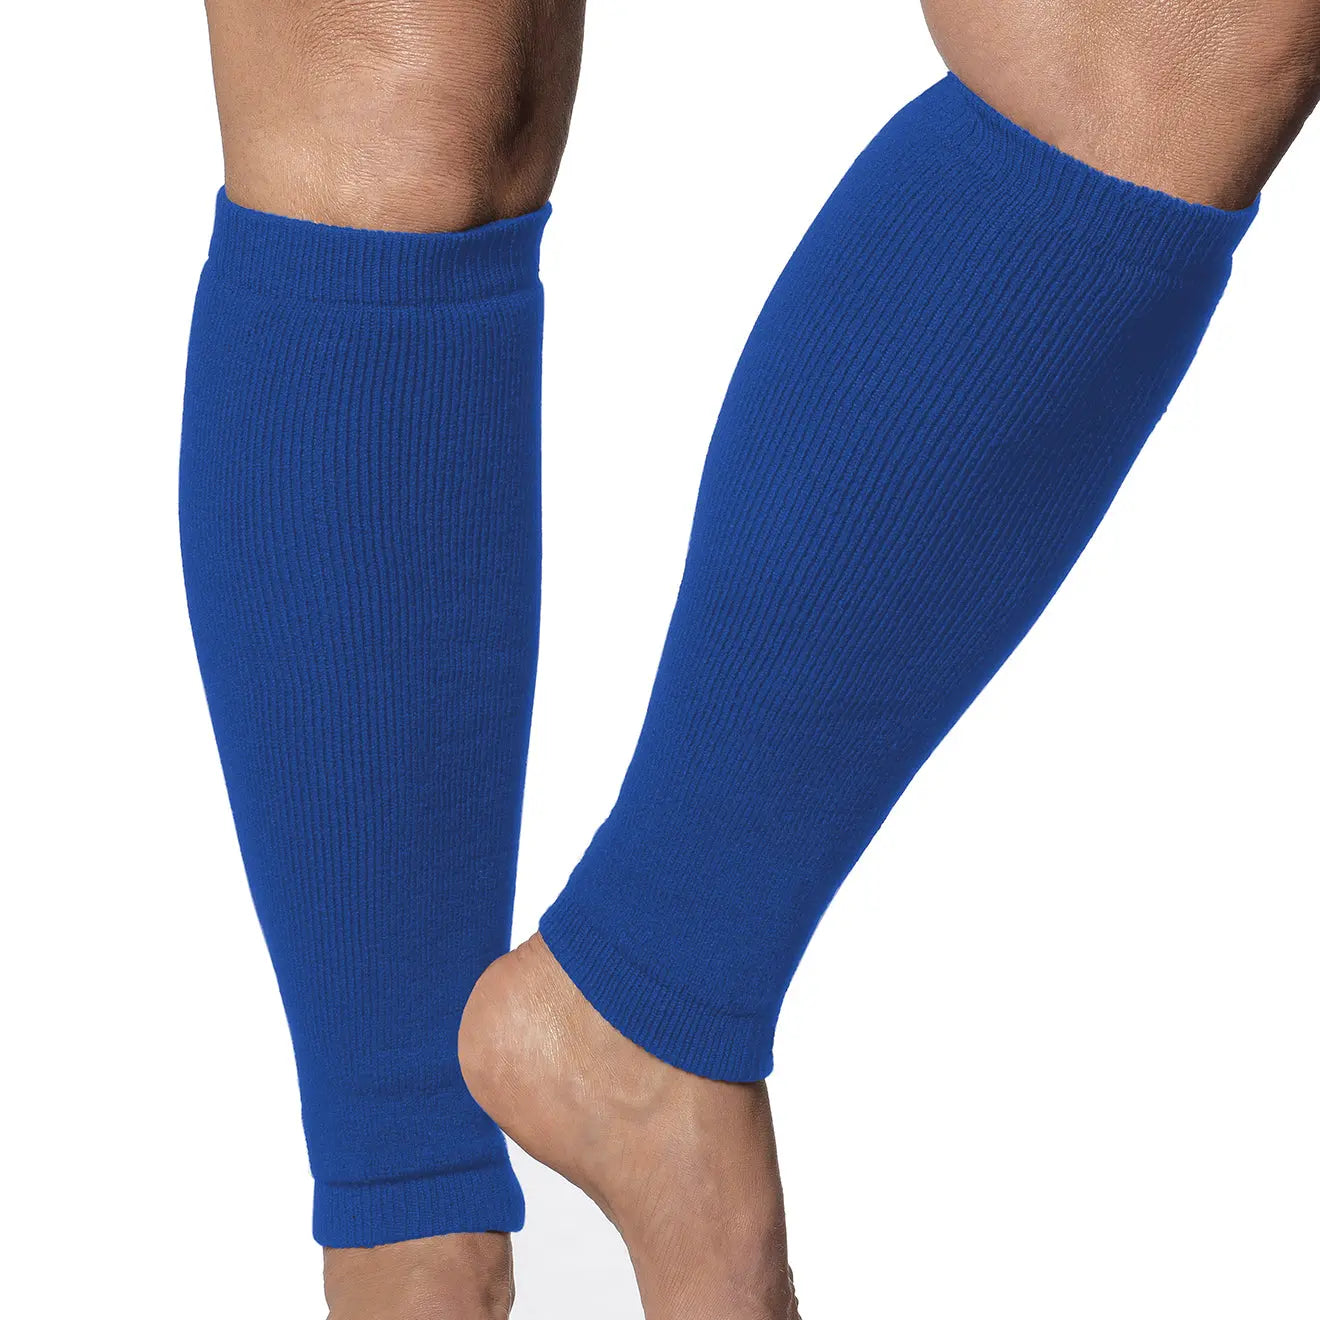 Leg Sleeves - Light Weight. Frail Skin Protectors. Royal Blue